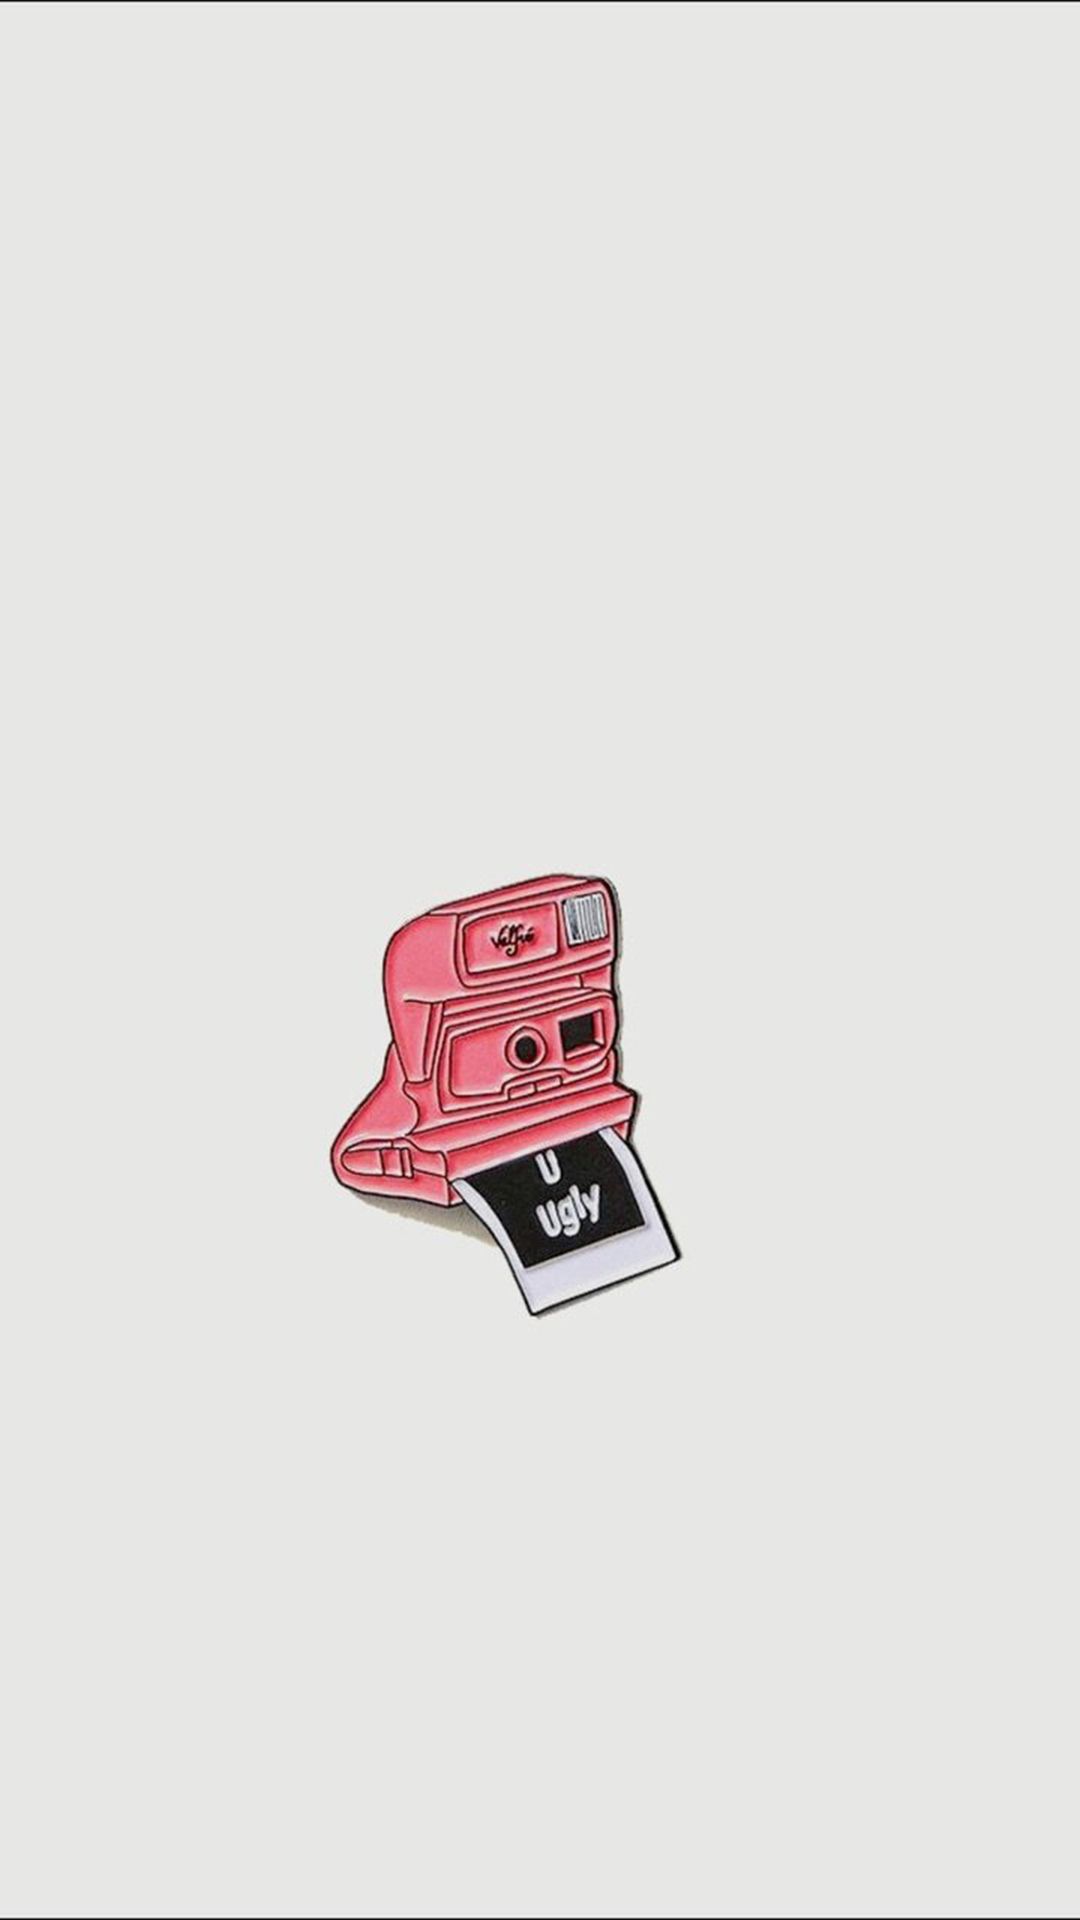 A pink polaroid camera pin - Vintage, couple